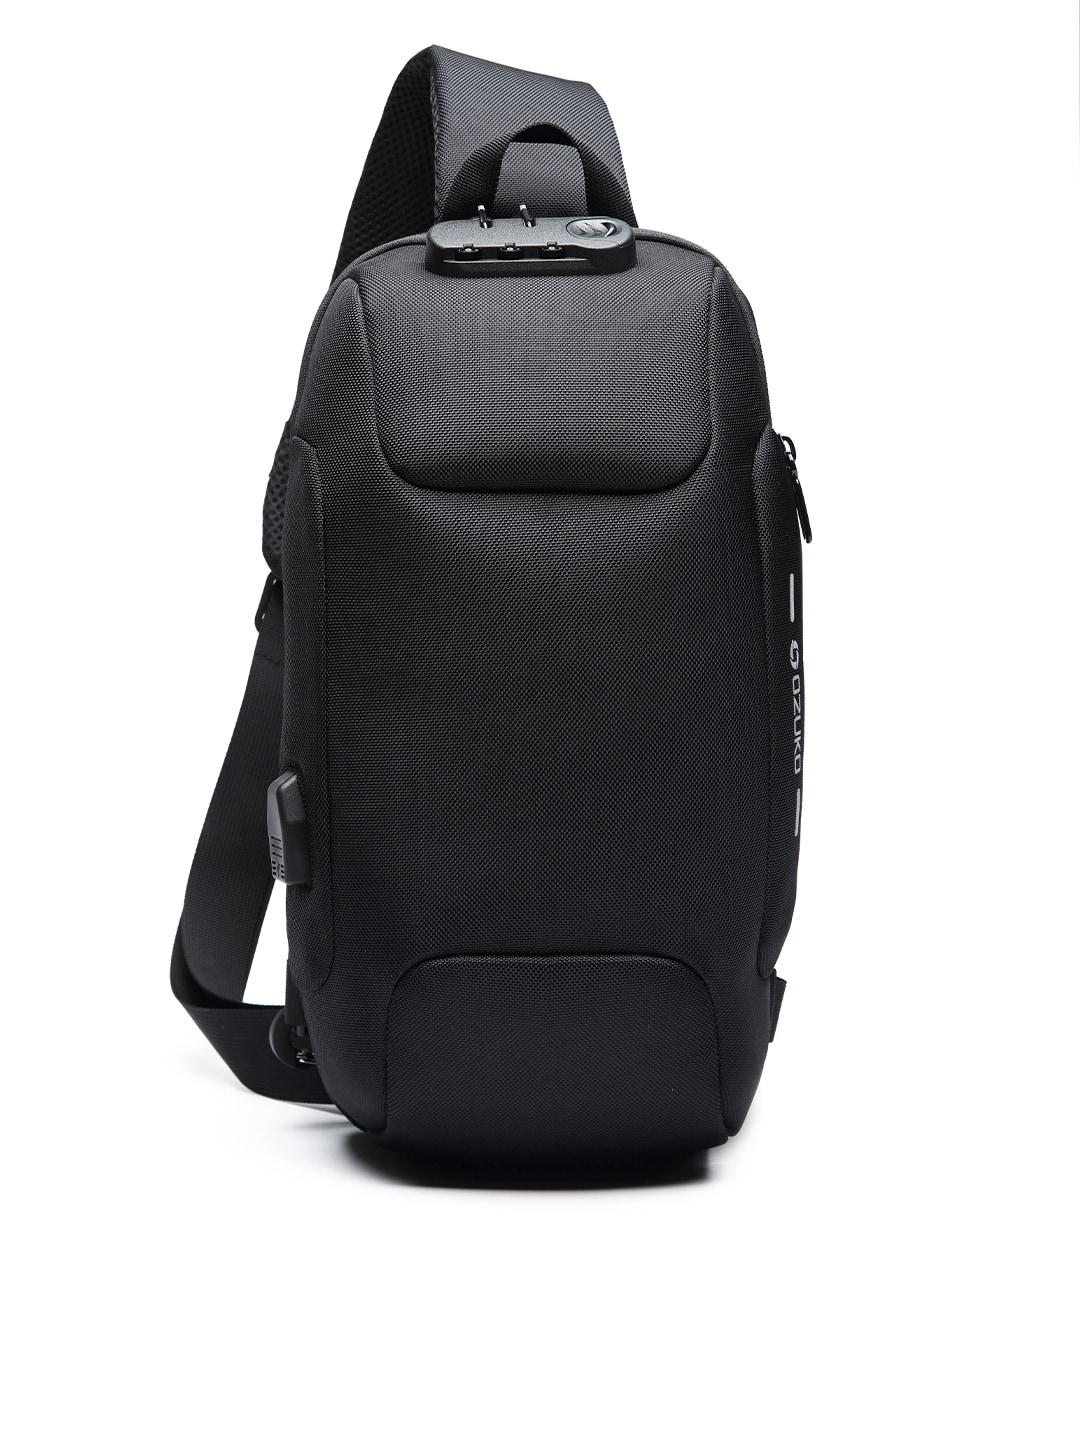 ozuko nova voyage black soft one size backpack